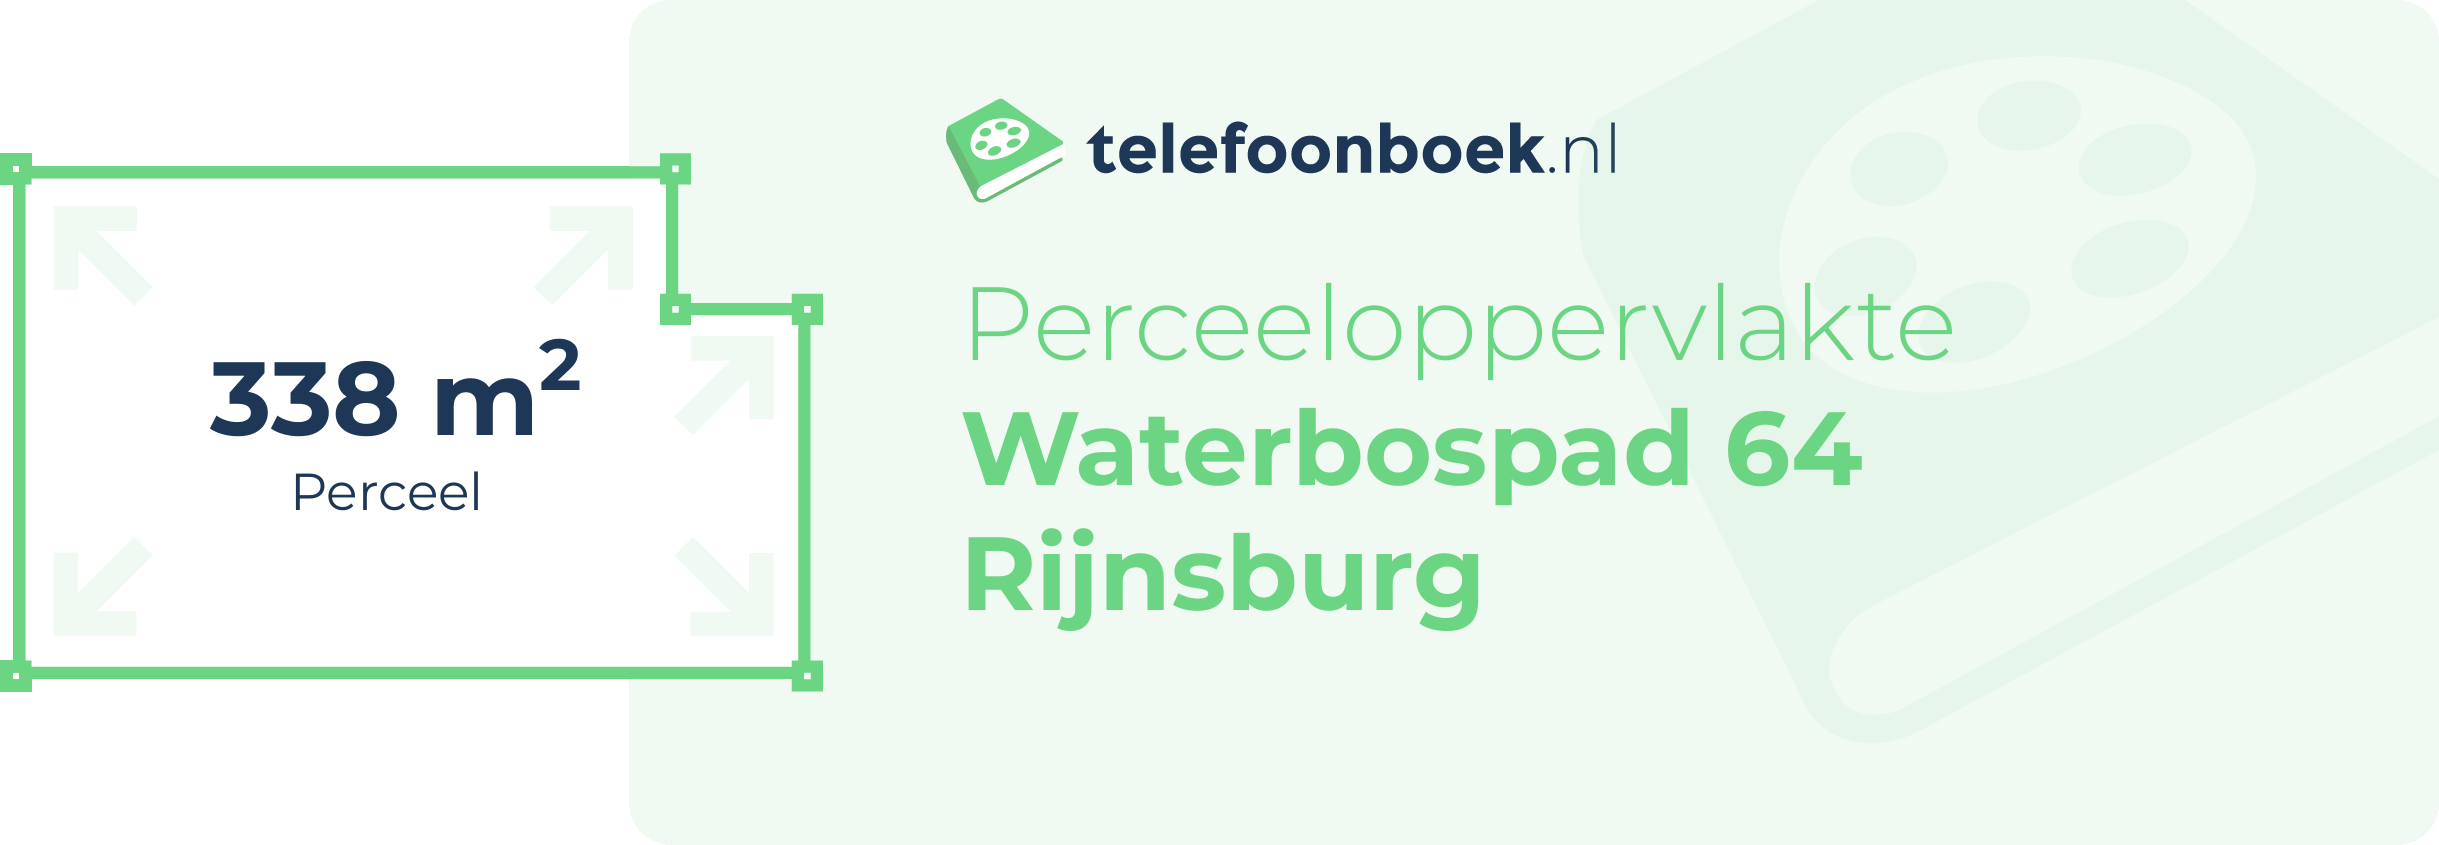 Perceeloppervlakte Waterbospad 64 Rijnsburg